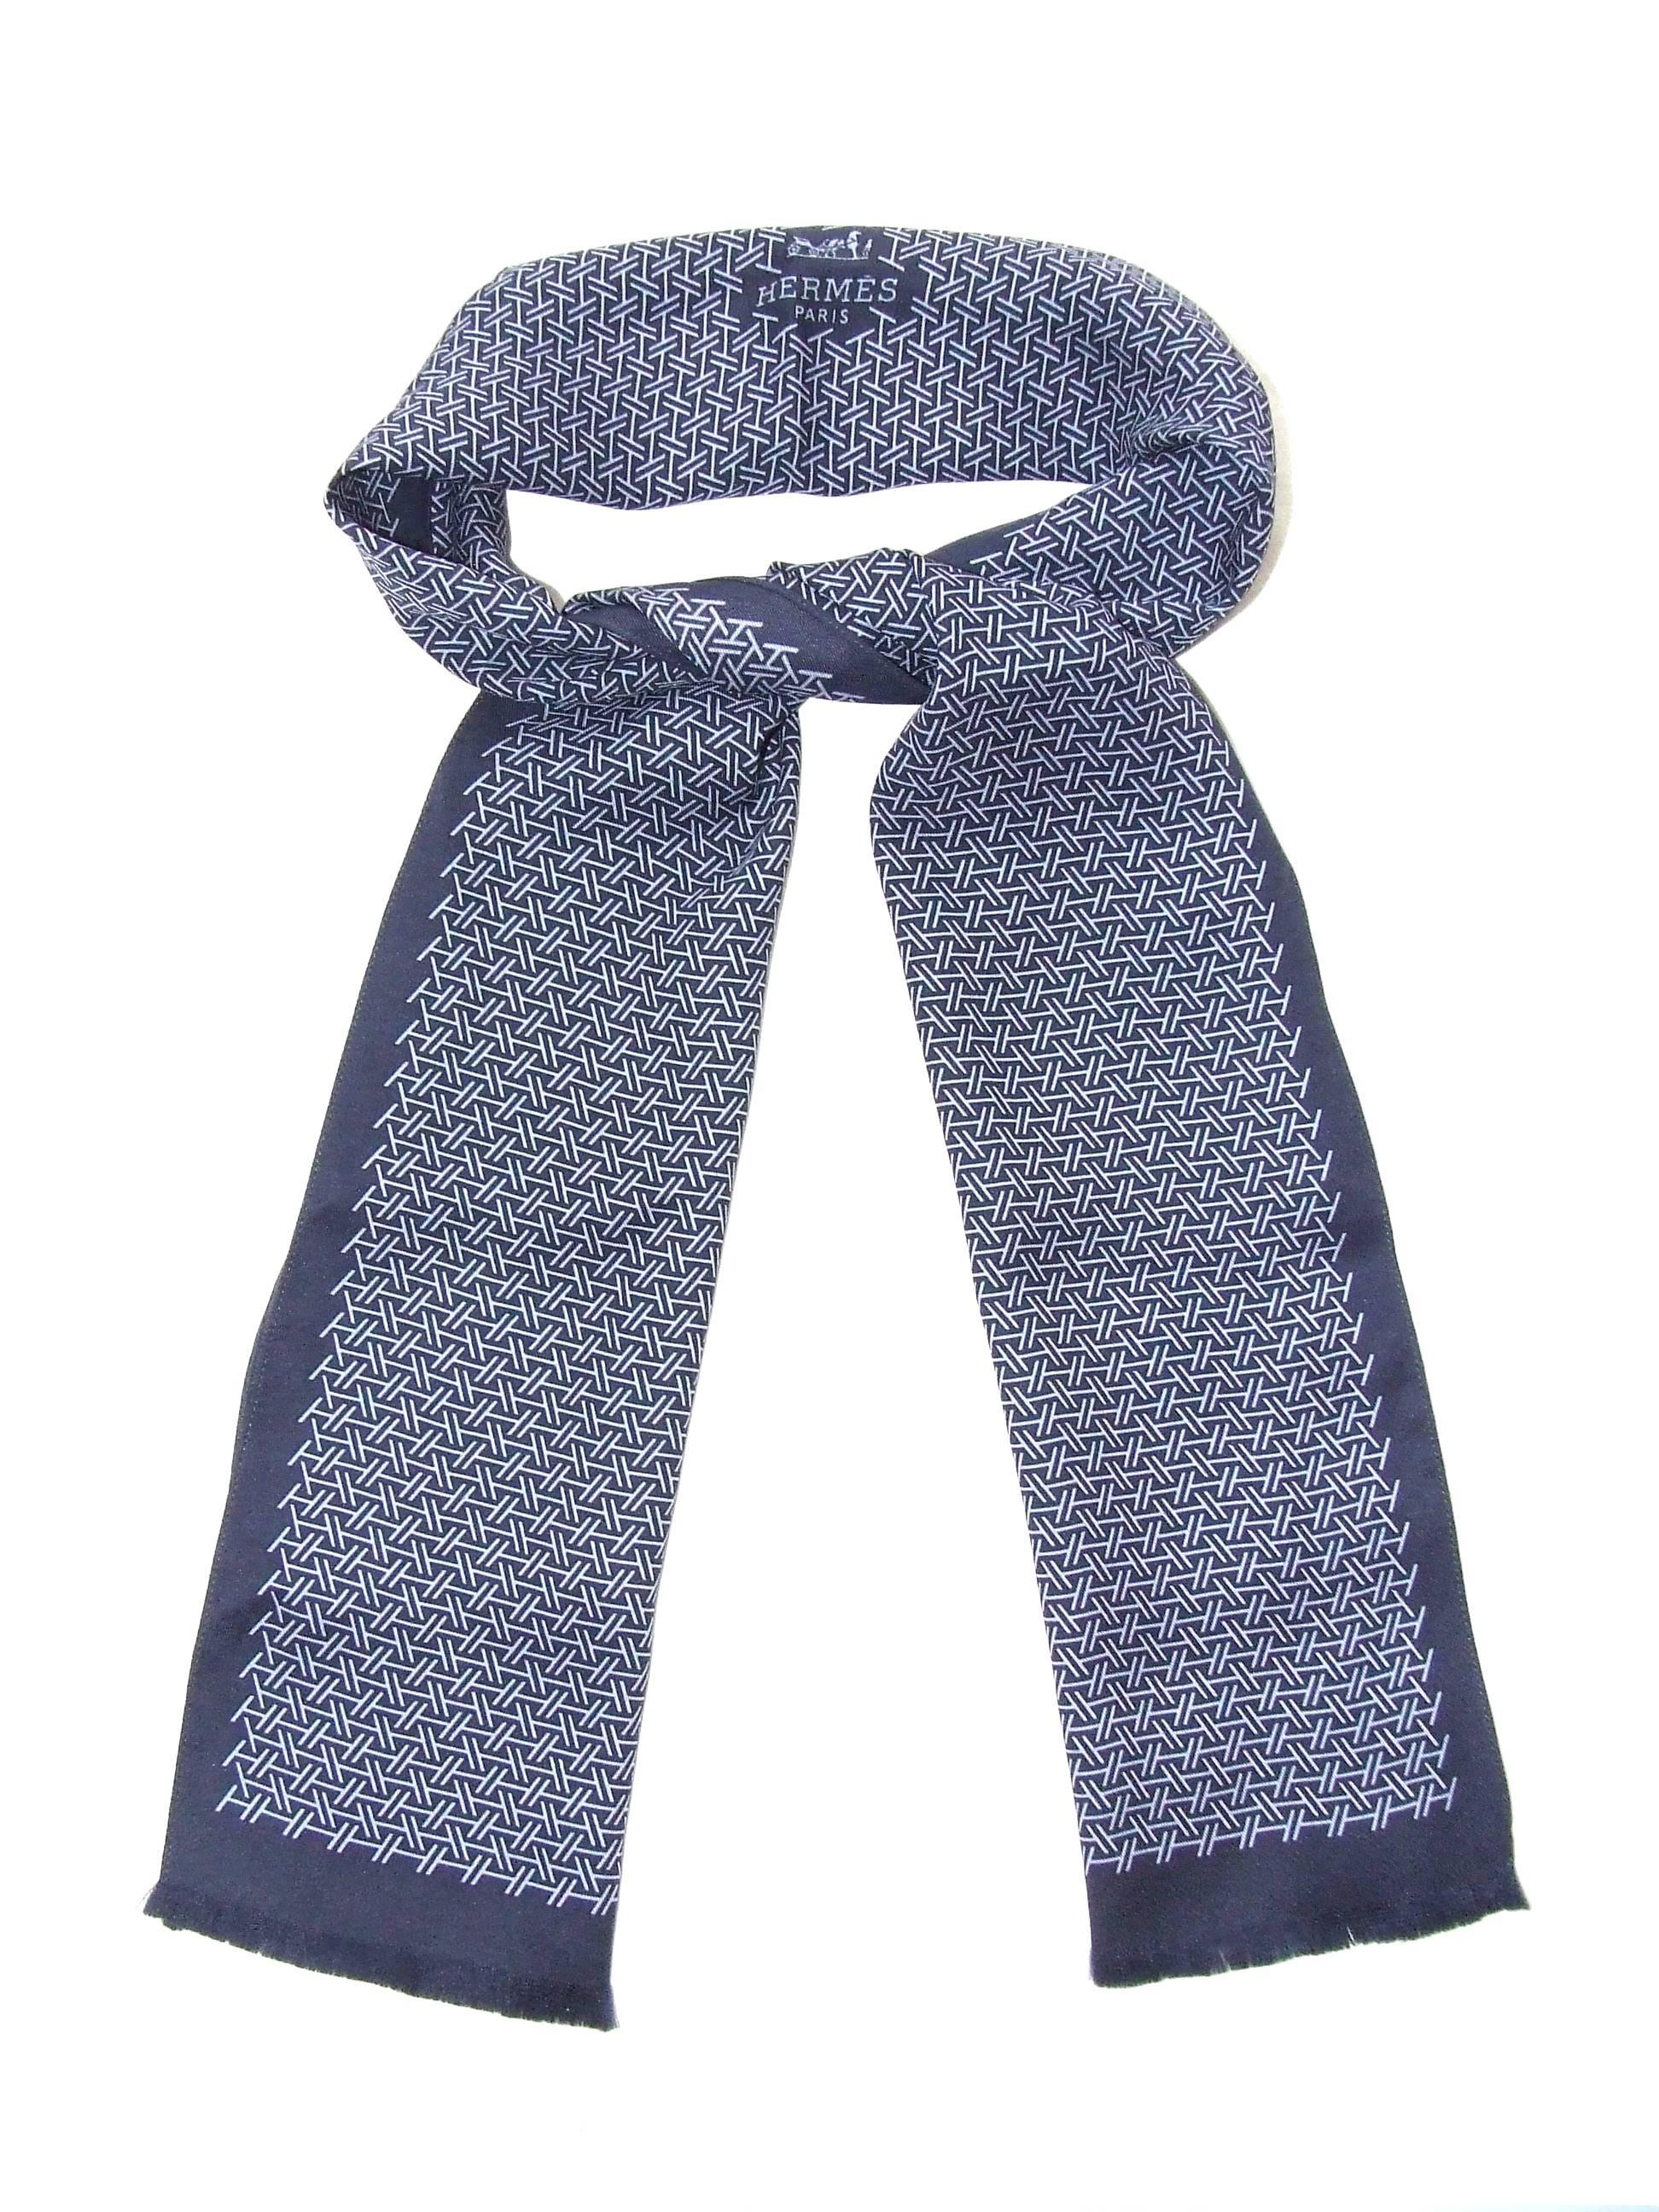 HERMES Silk Scarf-Tie Cravate-Foulard H printed Men's Collection Blue ...